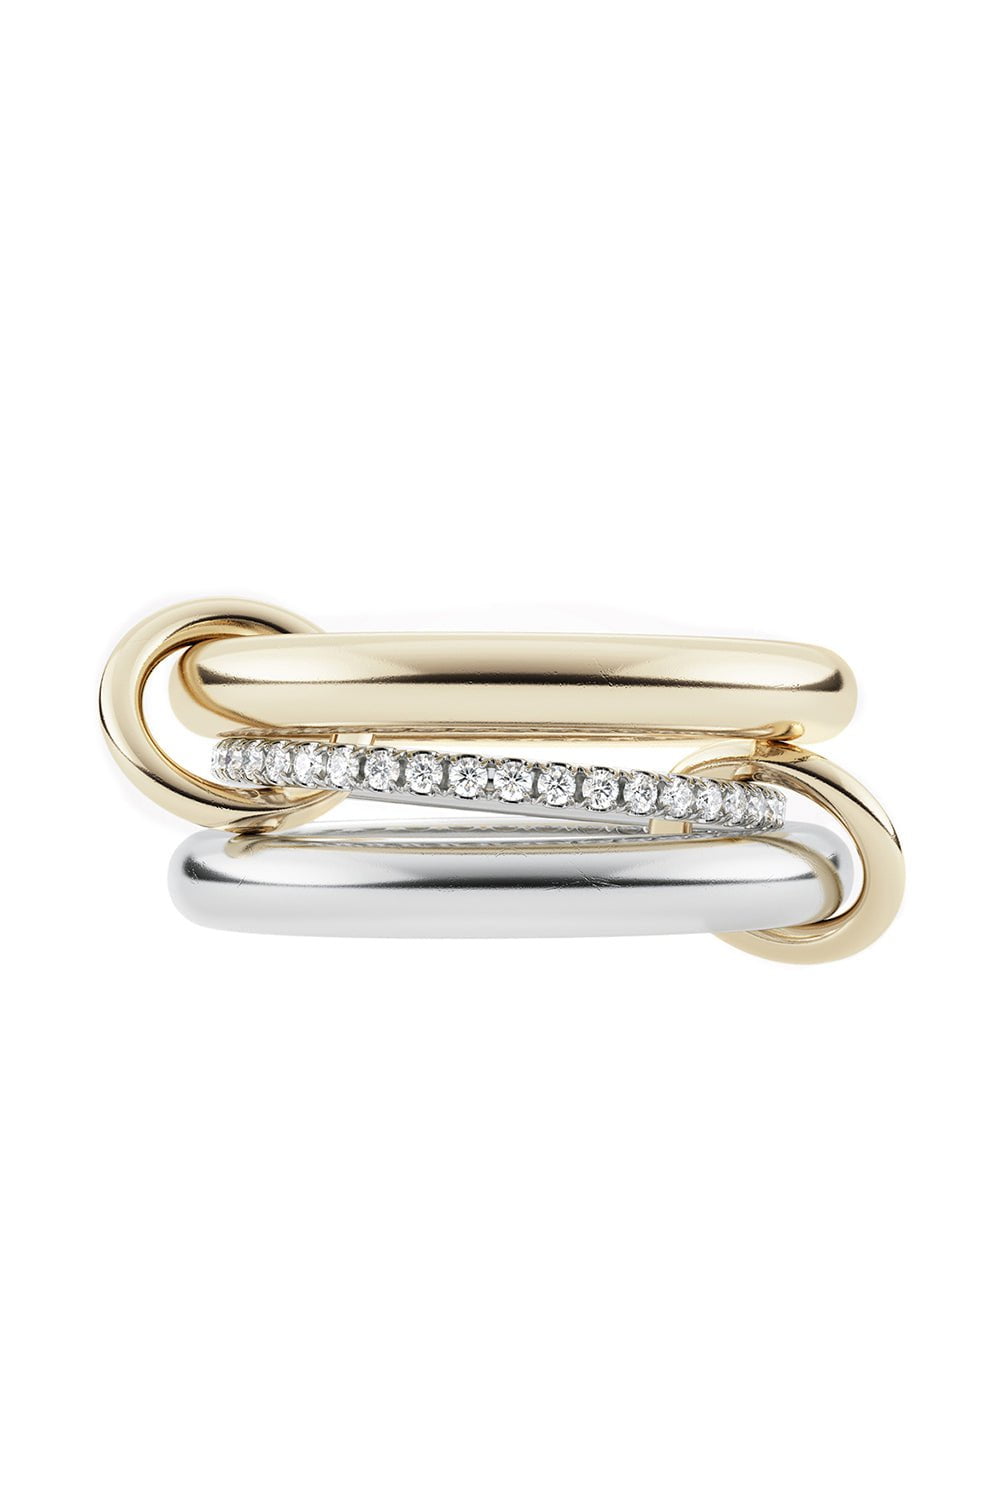 SPINELLI KILCOLLIN-Libra SP Three Linked Ring-YELLOW GOLD